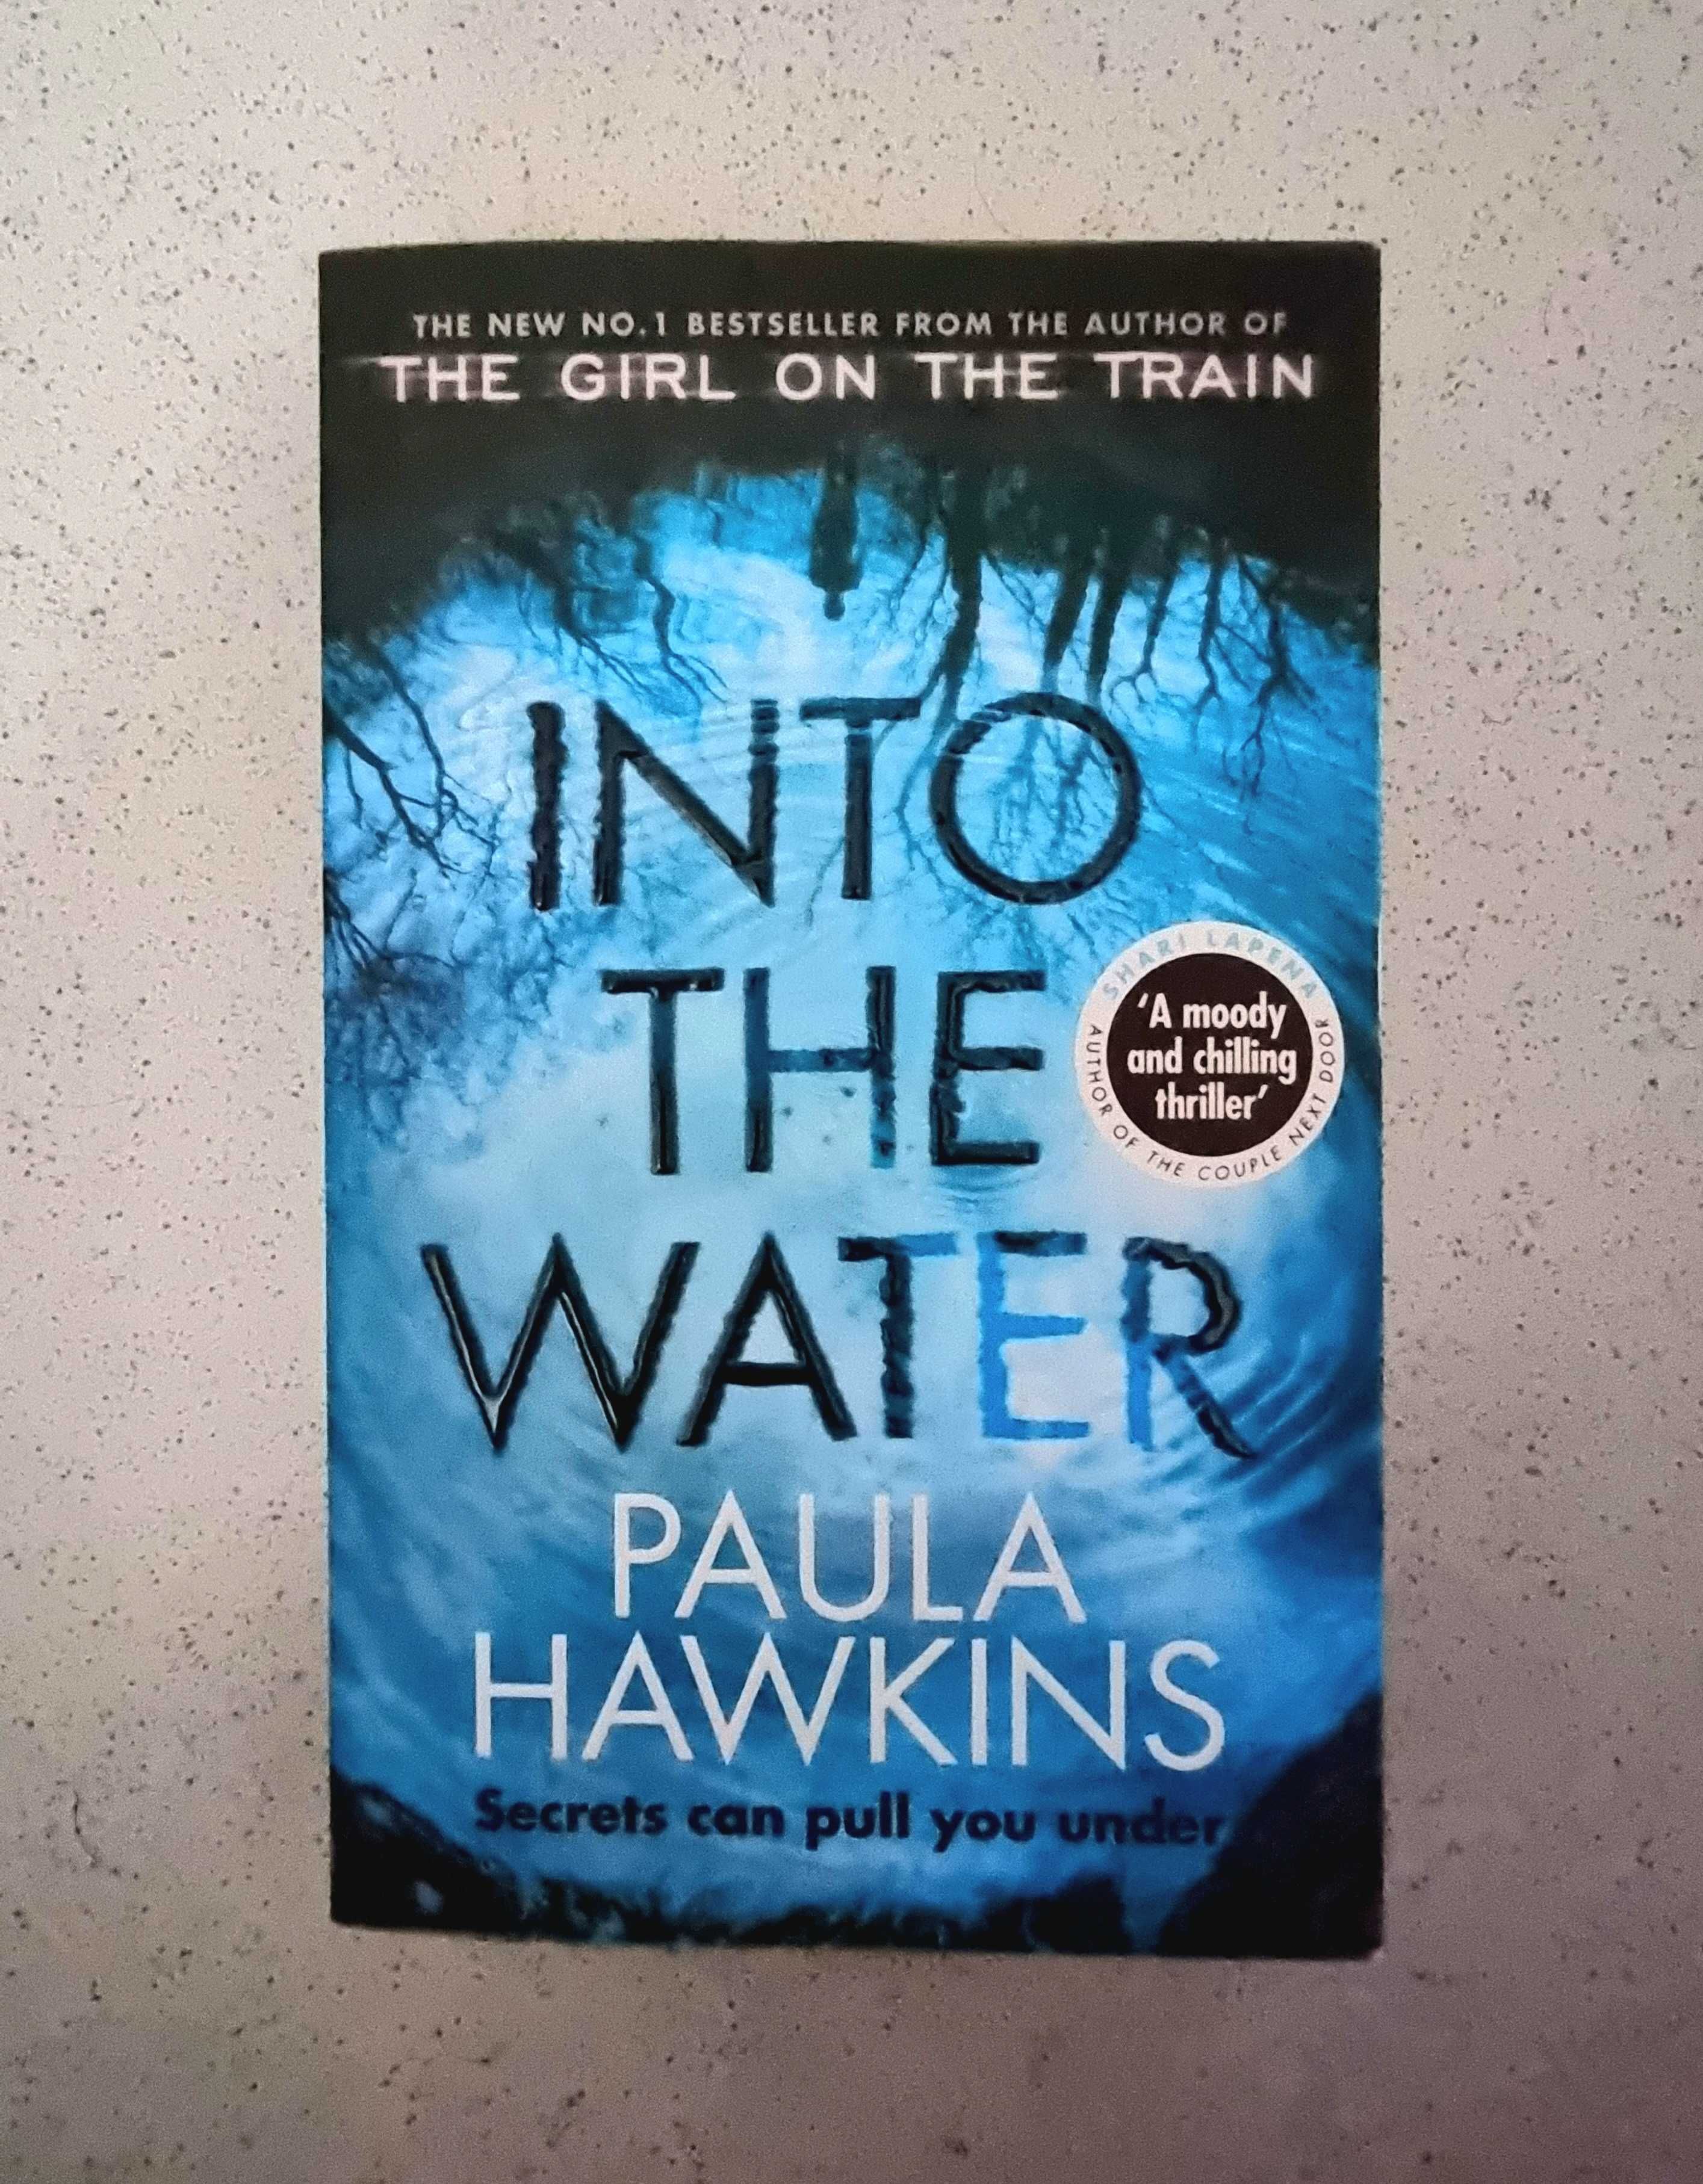 Livro "Into the Water" de Paula Hawkins (em Inglês)